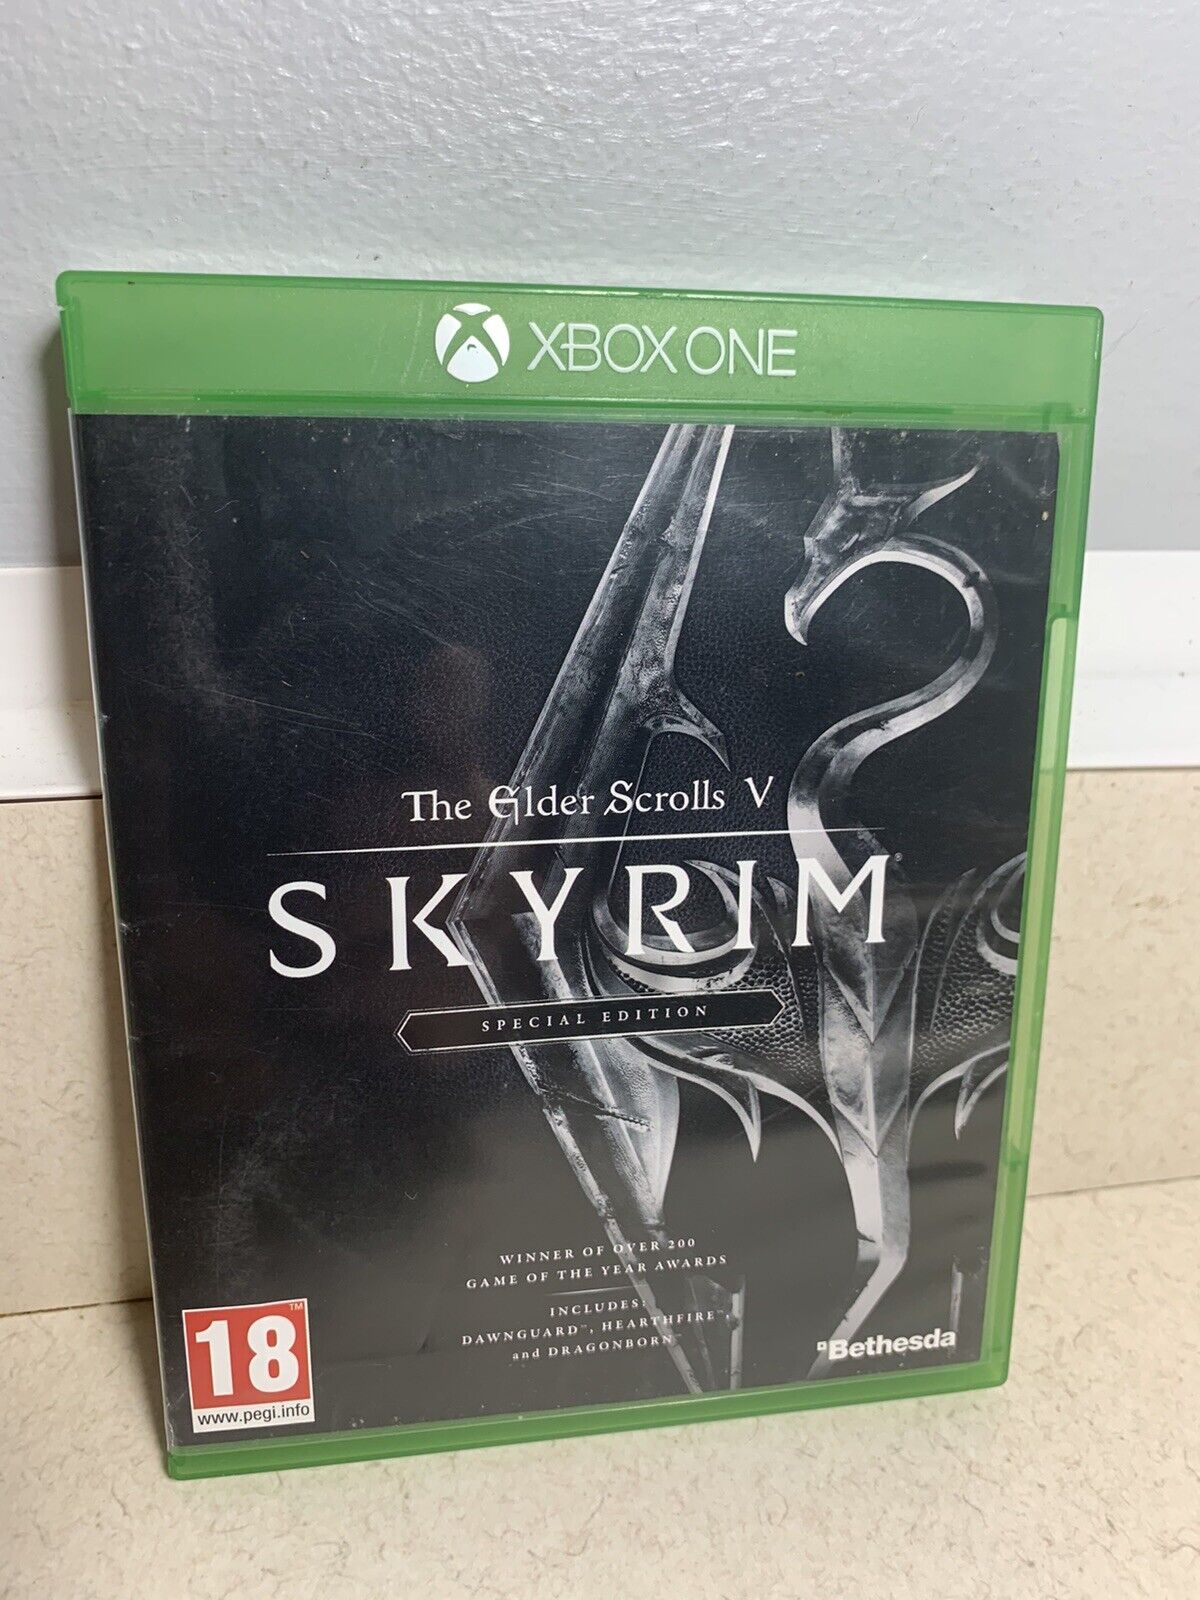 pastel Ananiver schokkend The Elder Scrolls V: Skyrim Special Edition (Xbox One, 2016) ~ Imported CIB  93155171244 | eBay